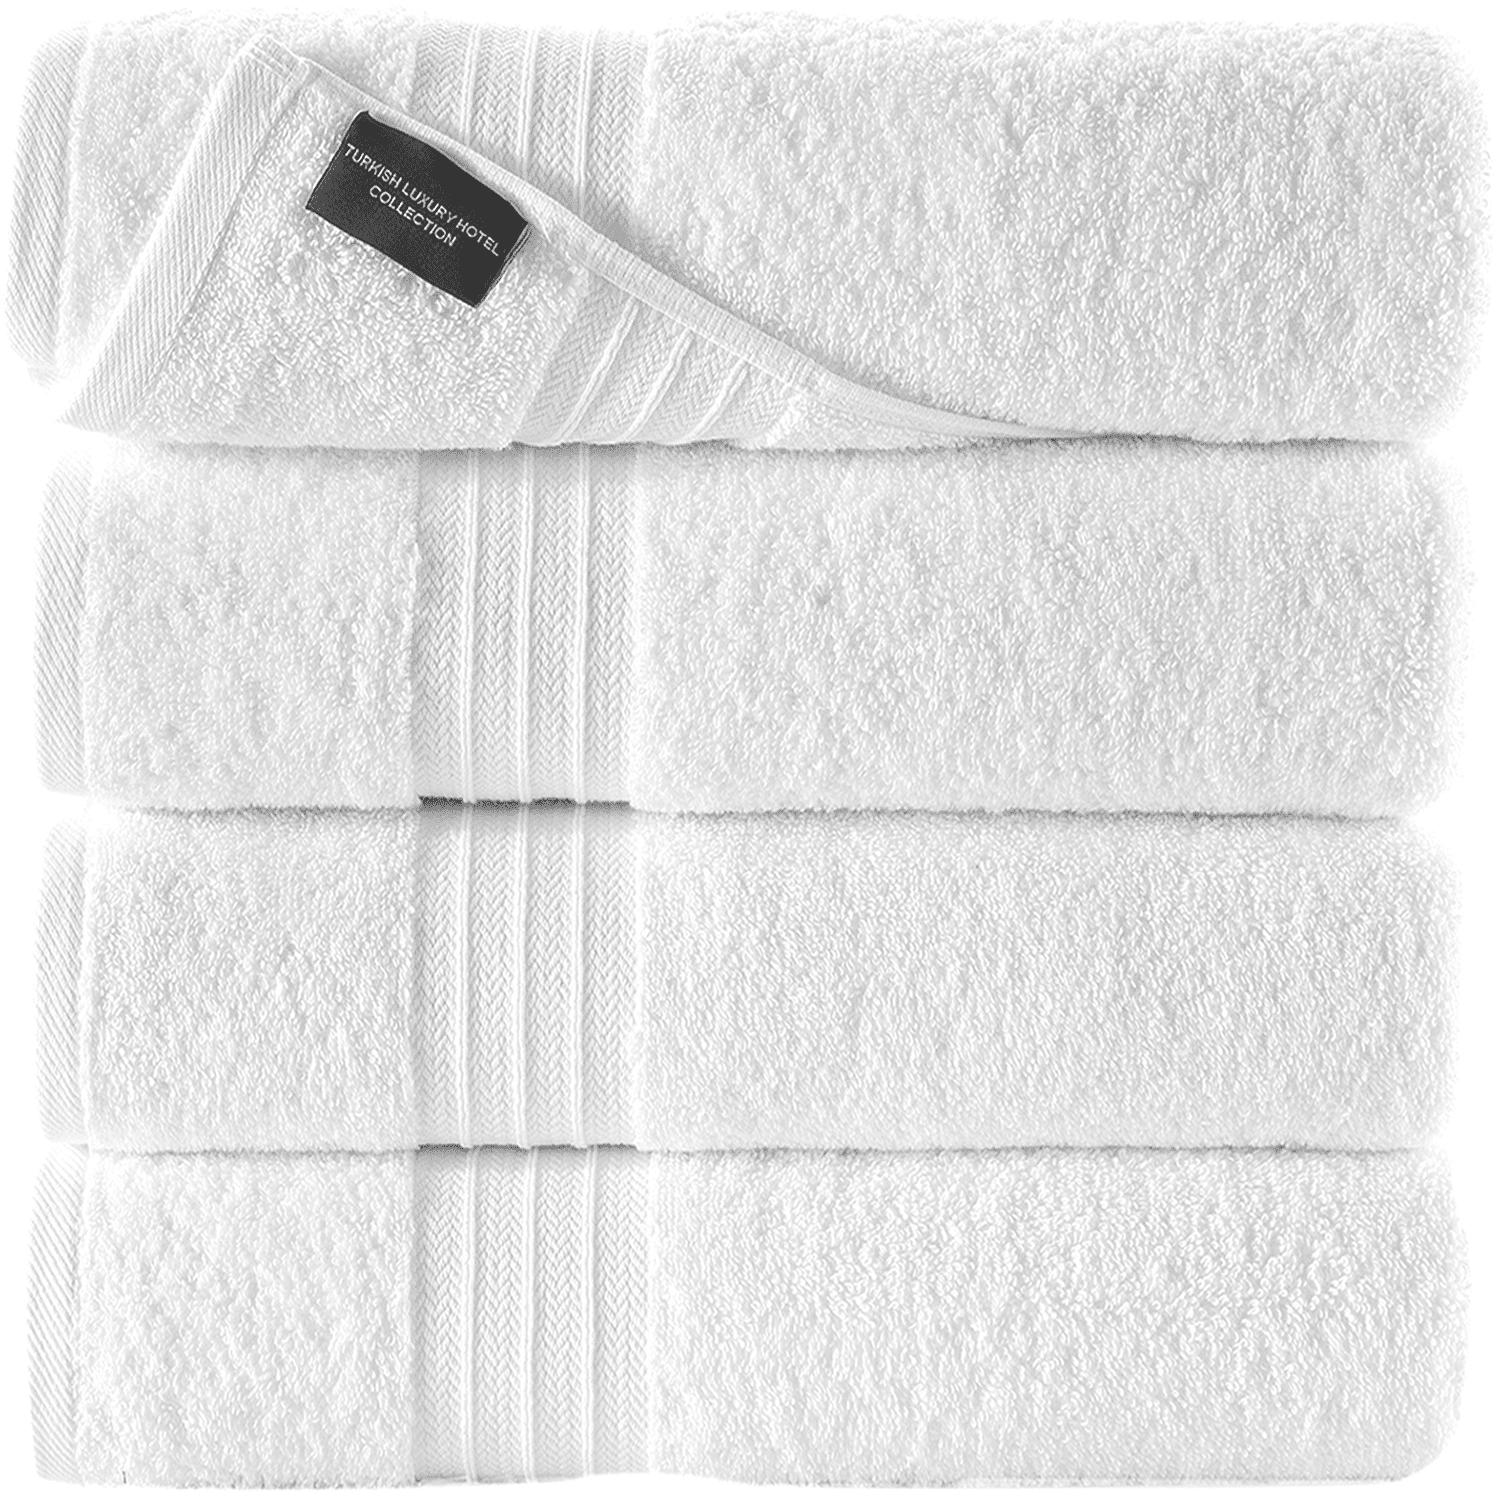 White Luxury Bath Towels Large - Cotton Hotel spa Bathroom Towel 30x56 4  PACK